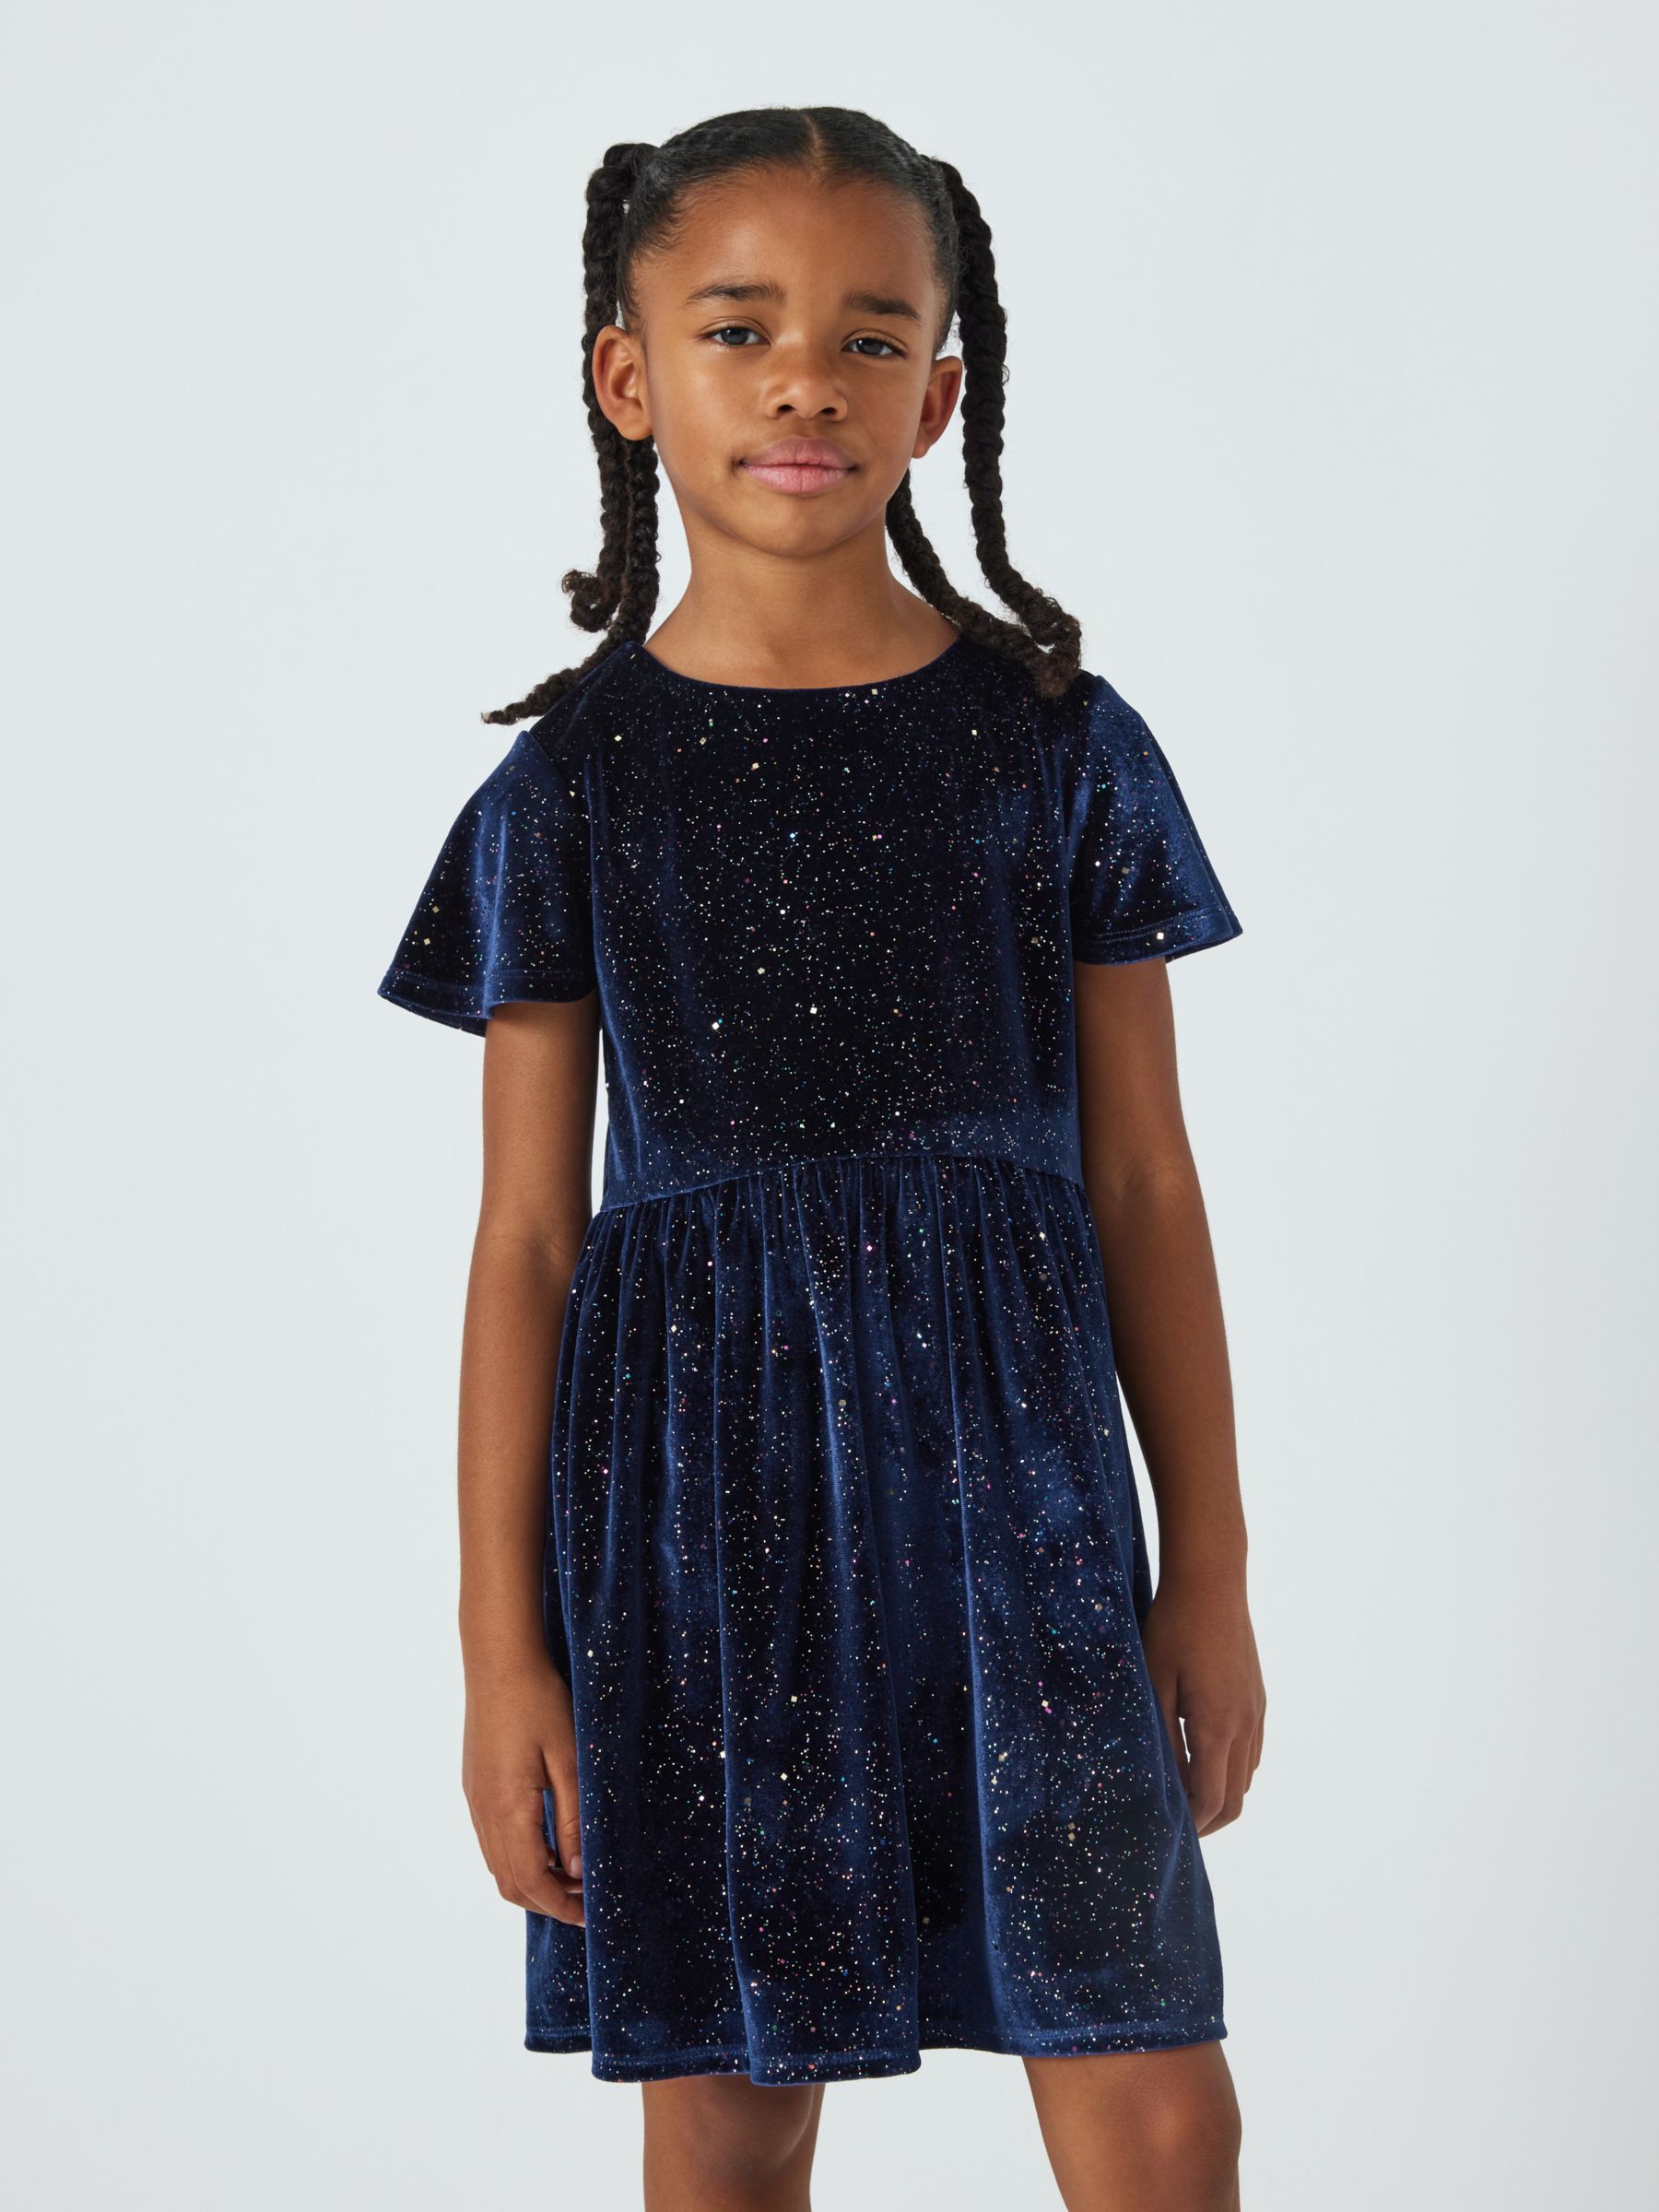 John Lewis Kids' Glitter Velour Dress, Navy/Multi at John Lewis & Partners